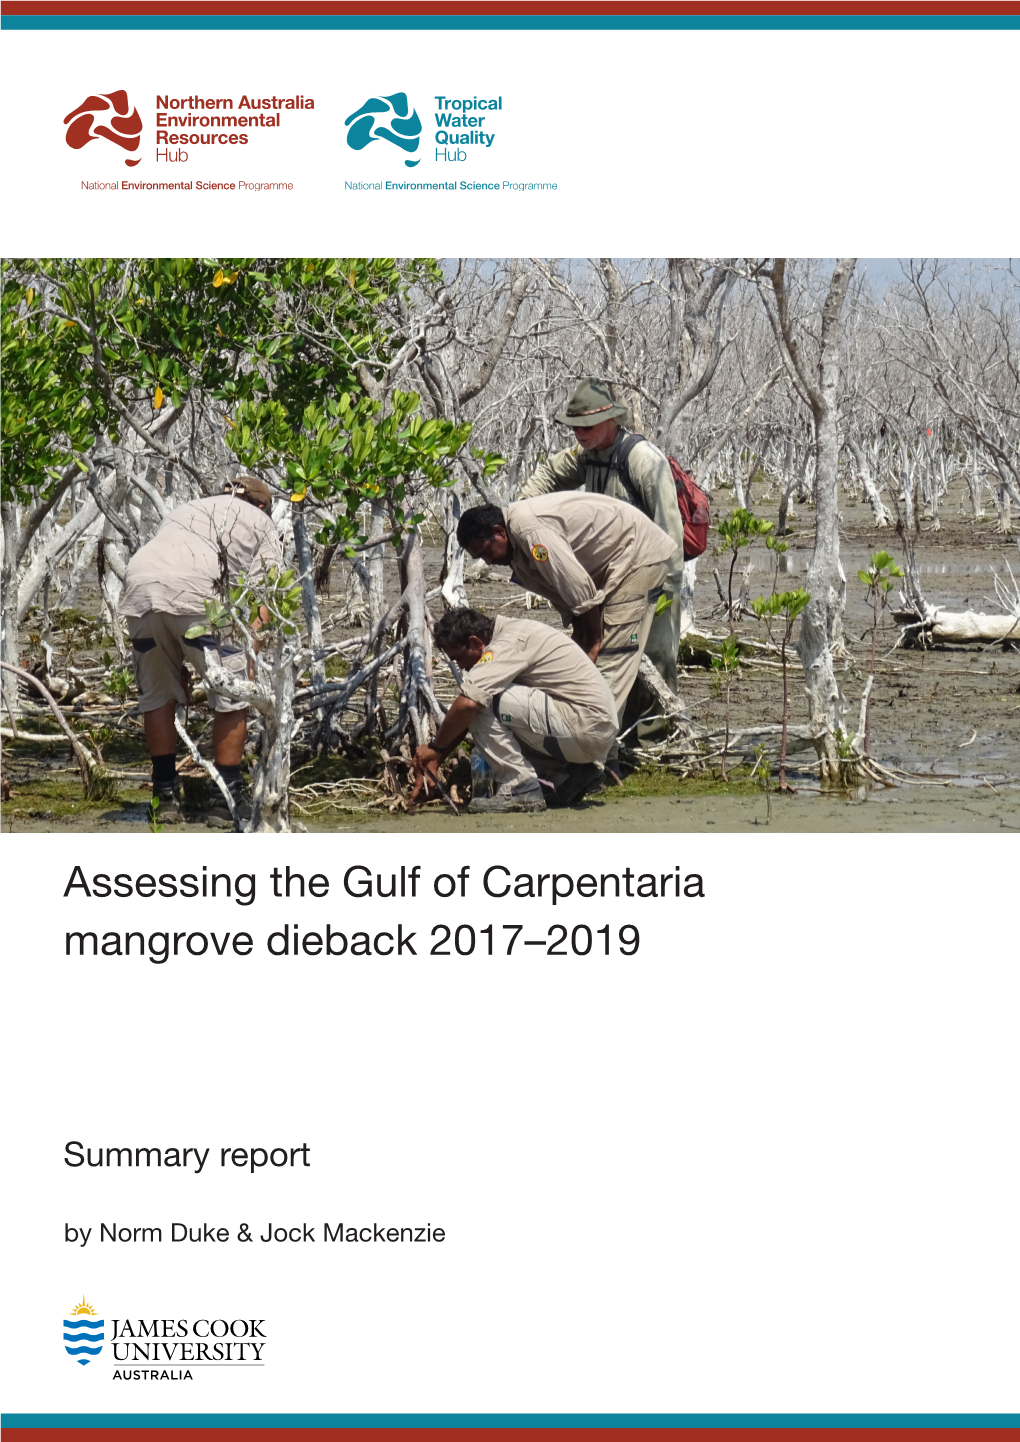 Assessing the Gulf of Carpentaria Mangrove Dieback 2017-2019